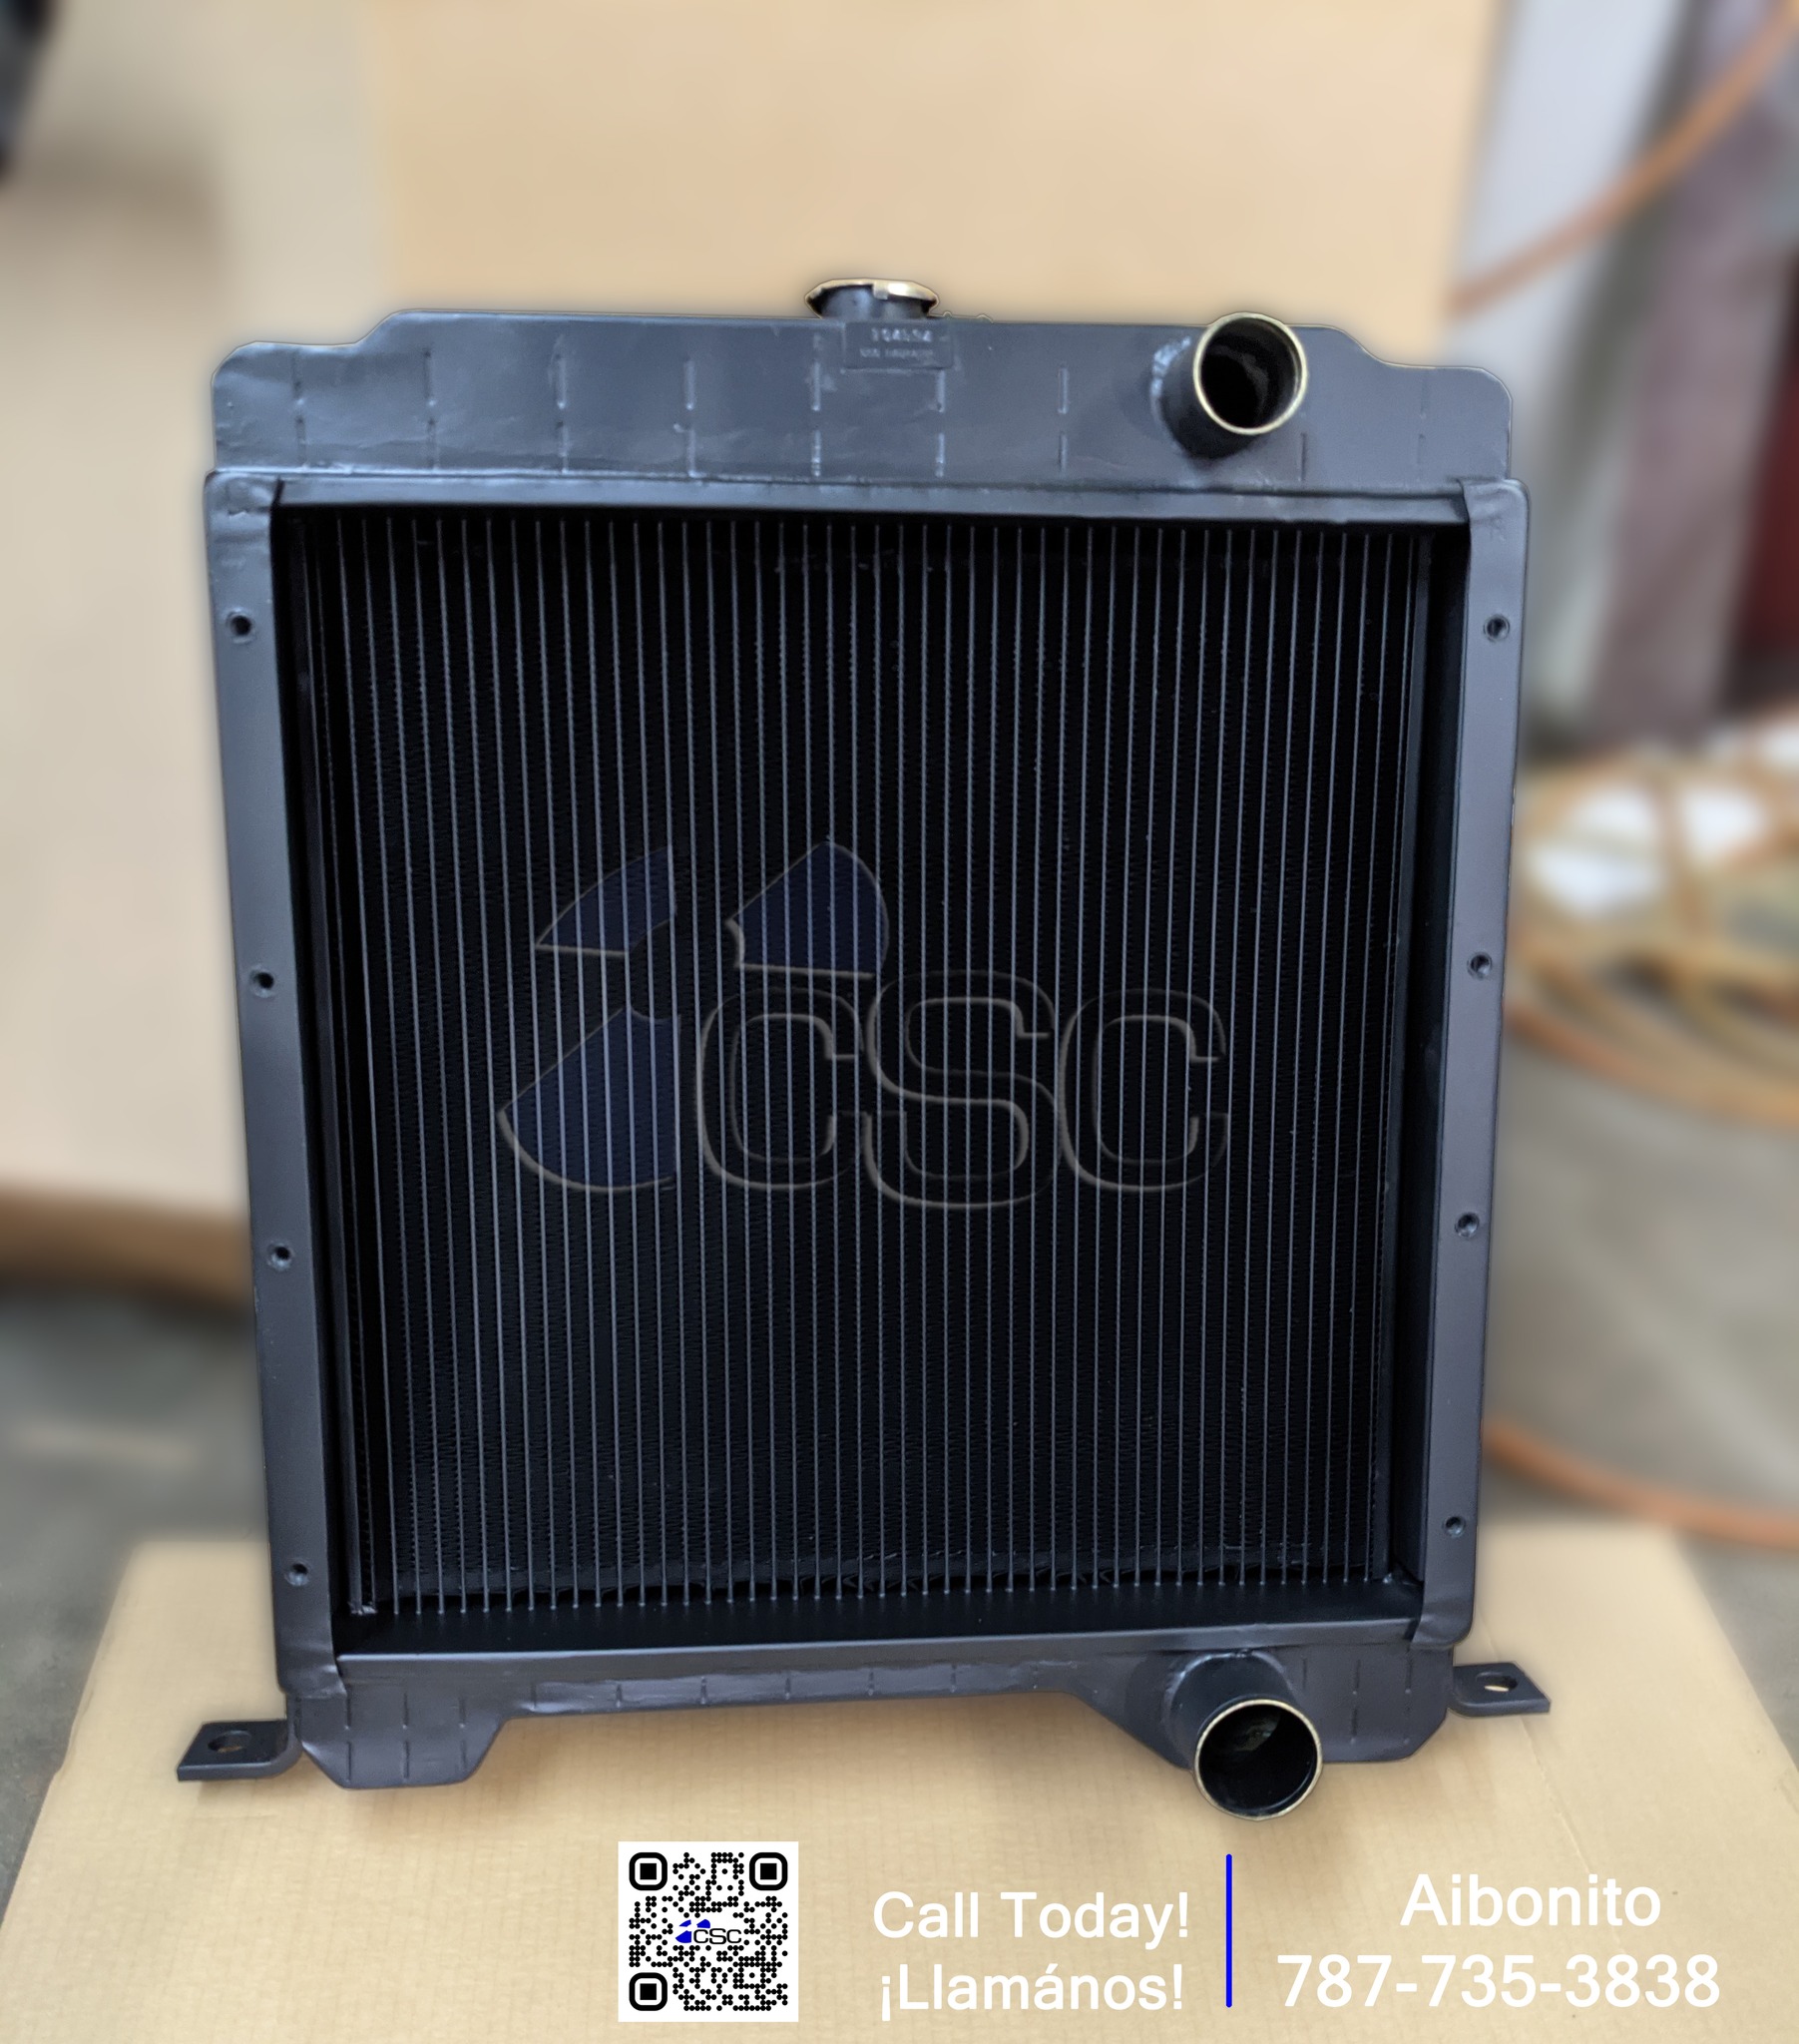 New product! 313RA001 Case / IH Skidsteer radiator